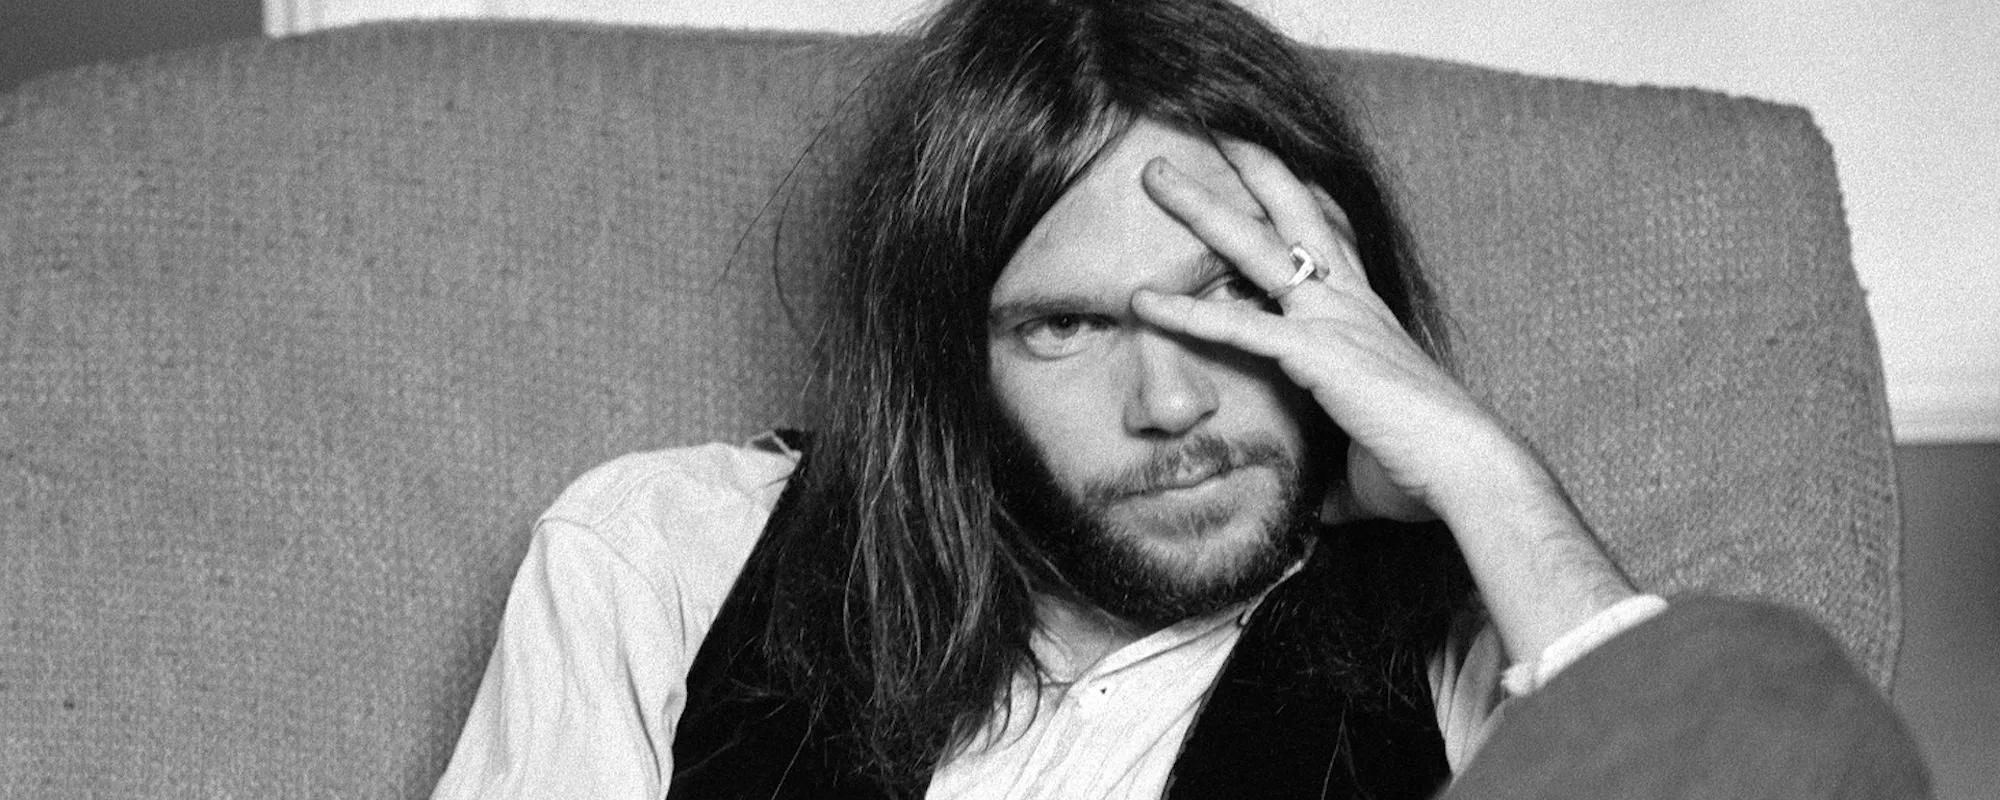 Neil Young: “When I Left SPOTIFY, I Felt Better”